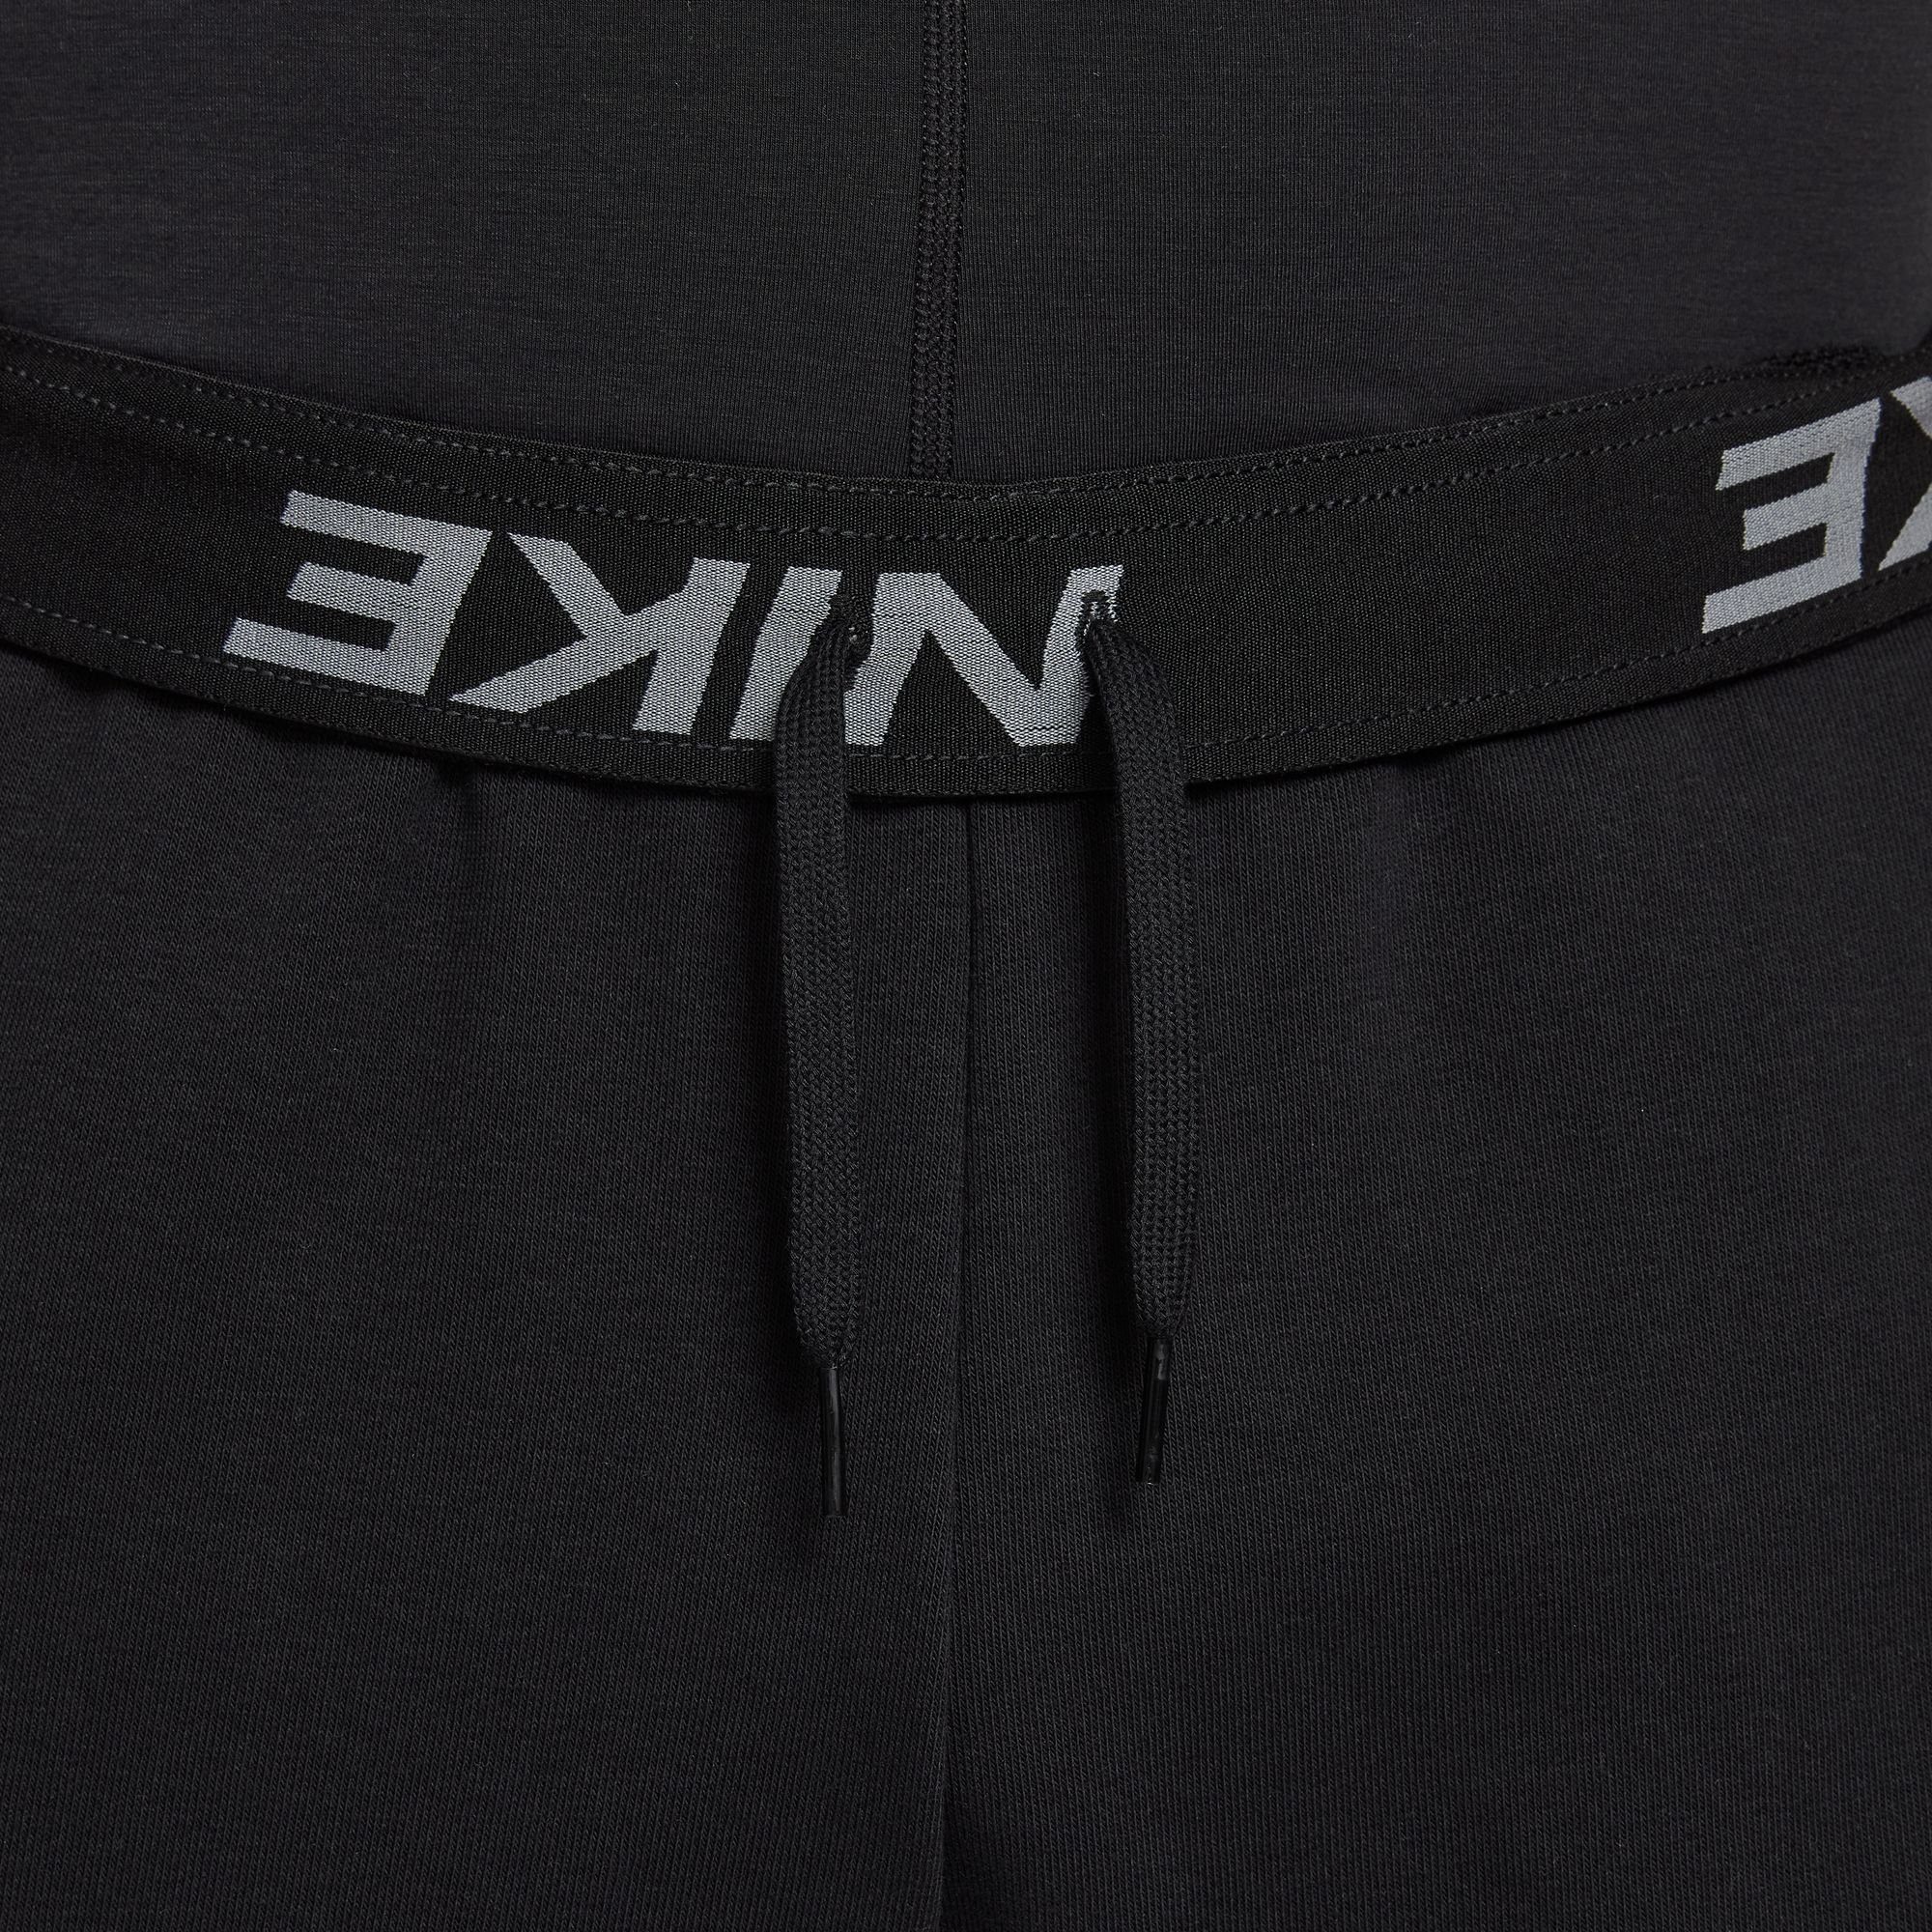 Nike Trainingshose DRI-FIT MEN'S TRAINING PANTS schwarz TAPERED